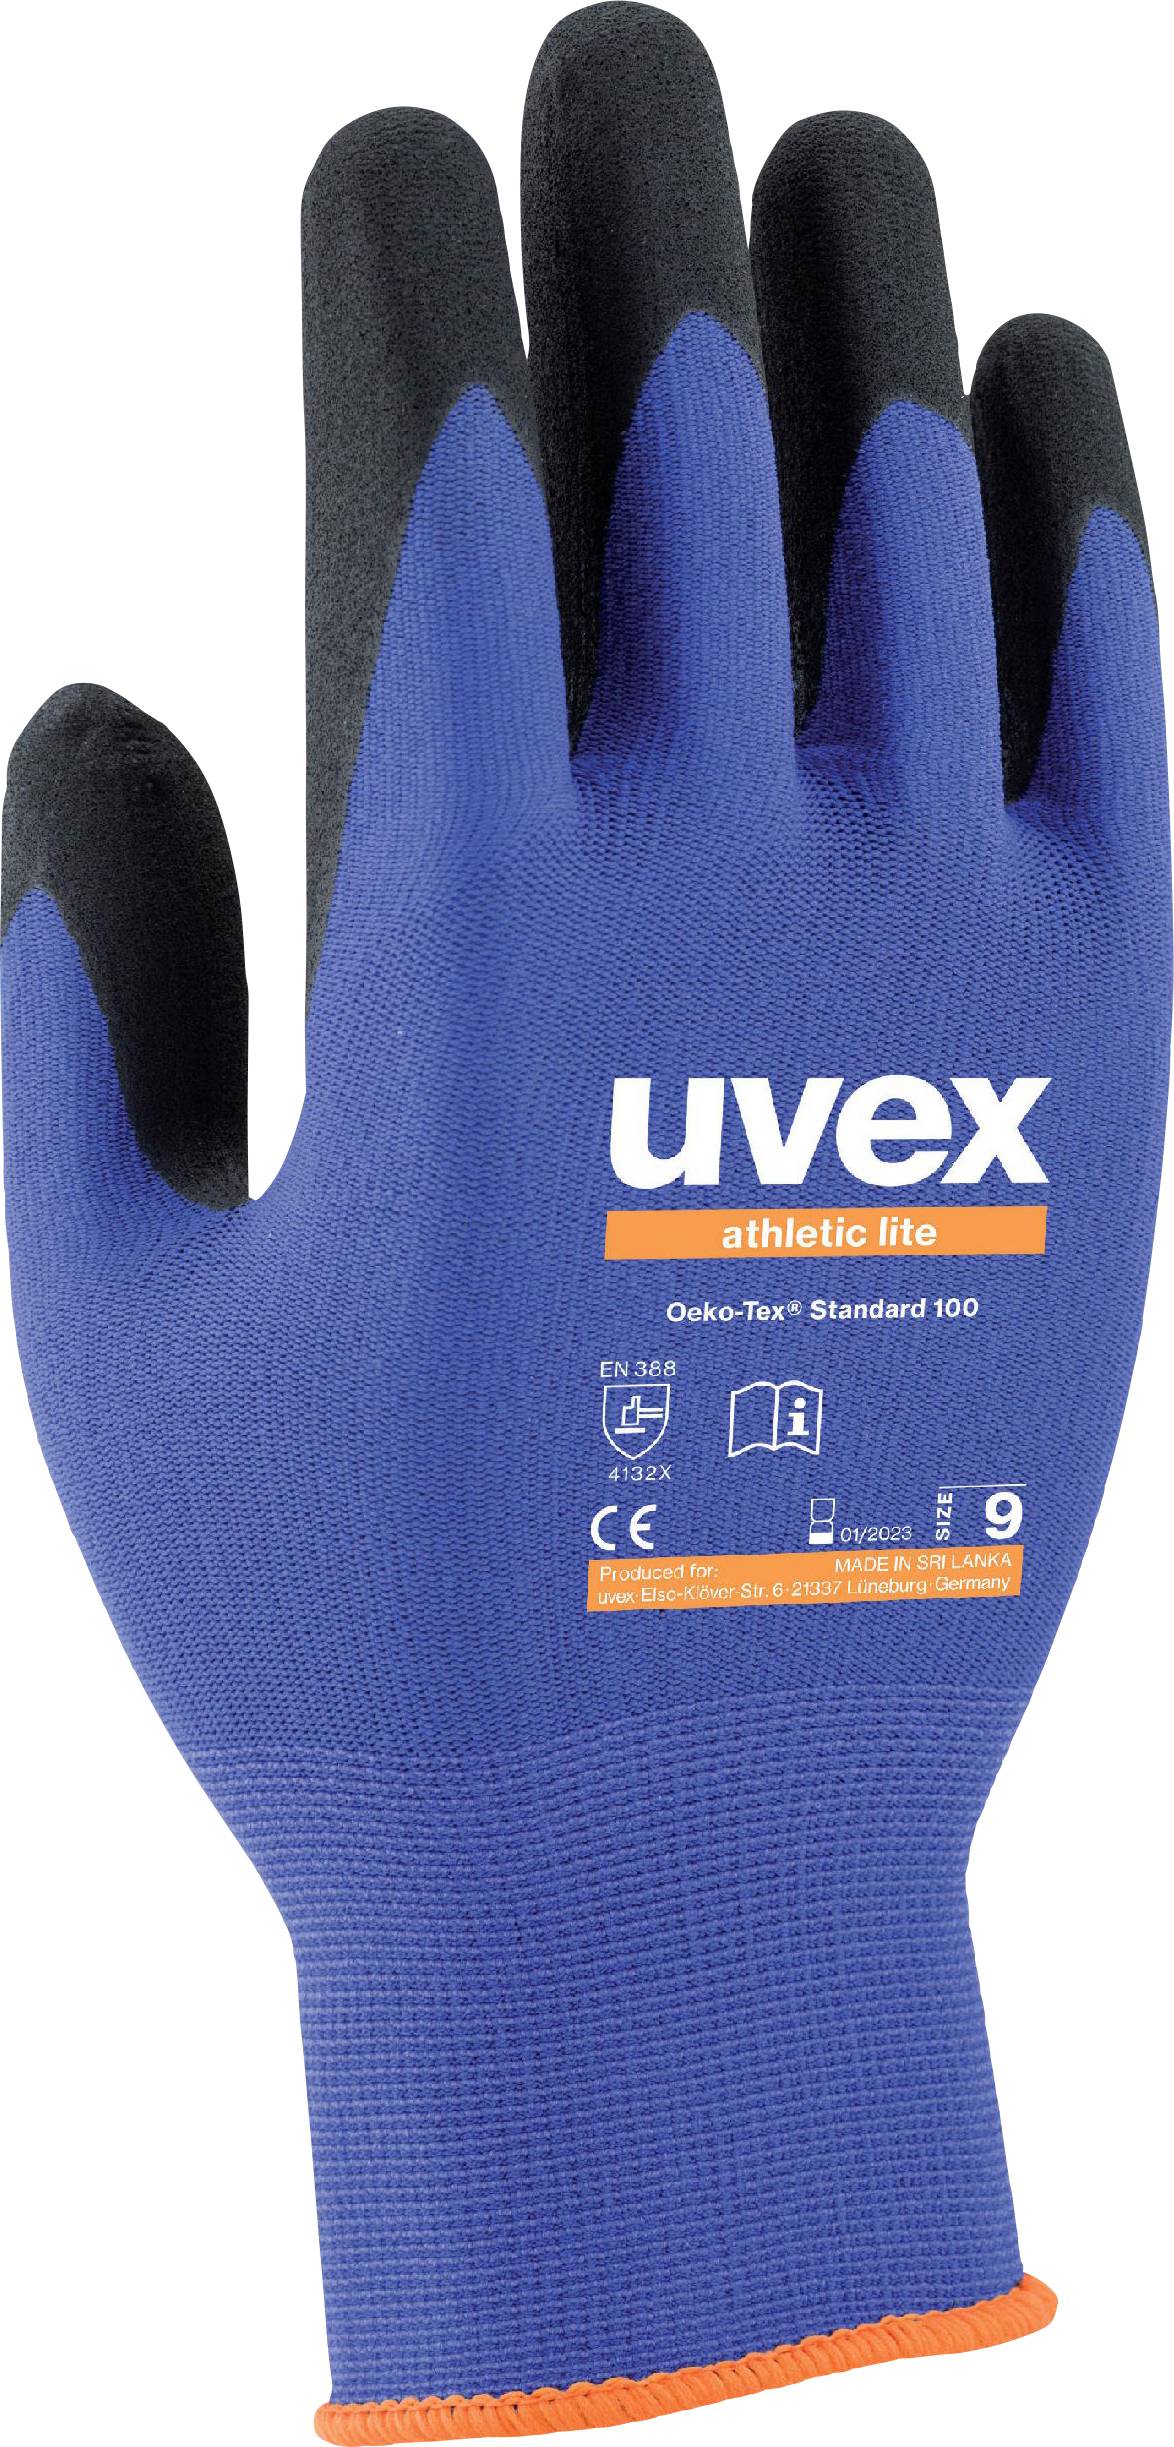 UVEX 6038 6002708 Montagehandschuh Größe (Handschuhe): 8 EN 388:2016 1 Stück (6002708)